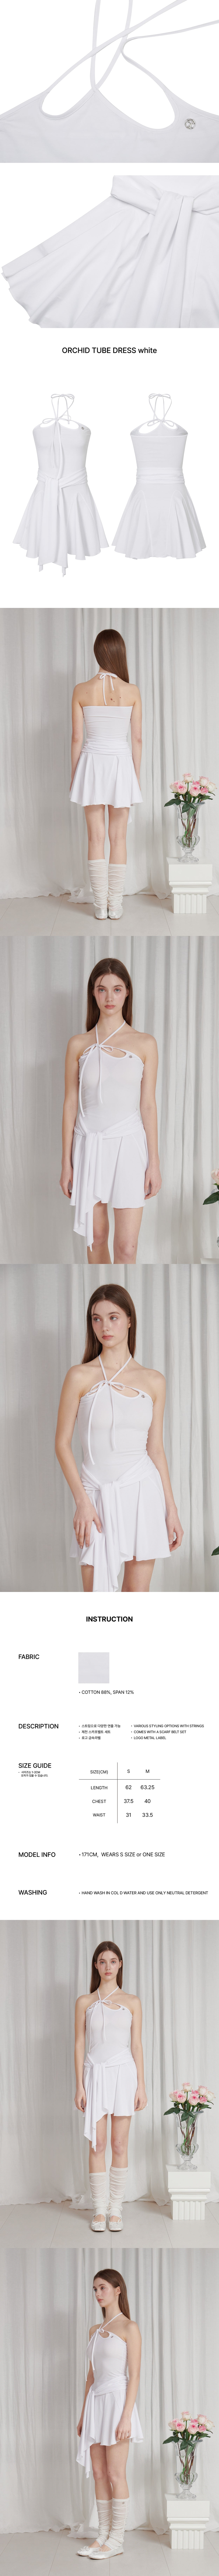 ORCHID TUBE DRESS white